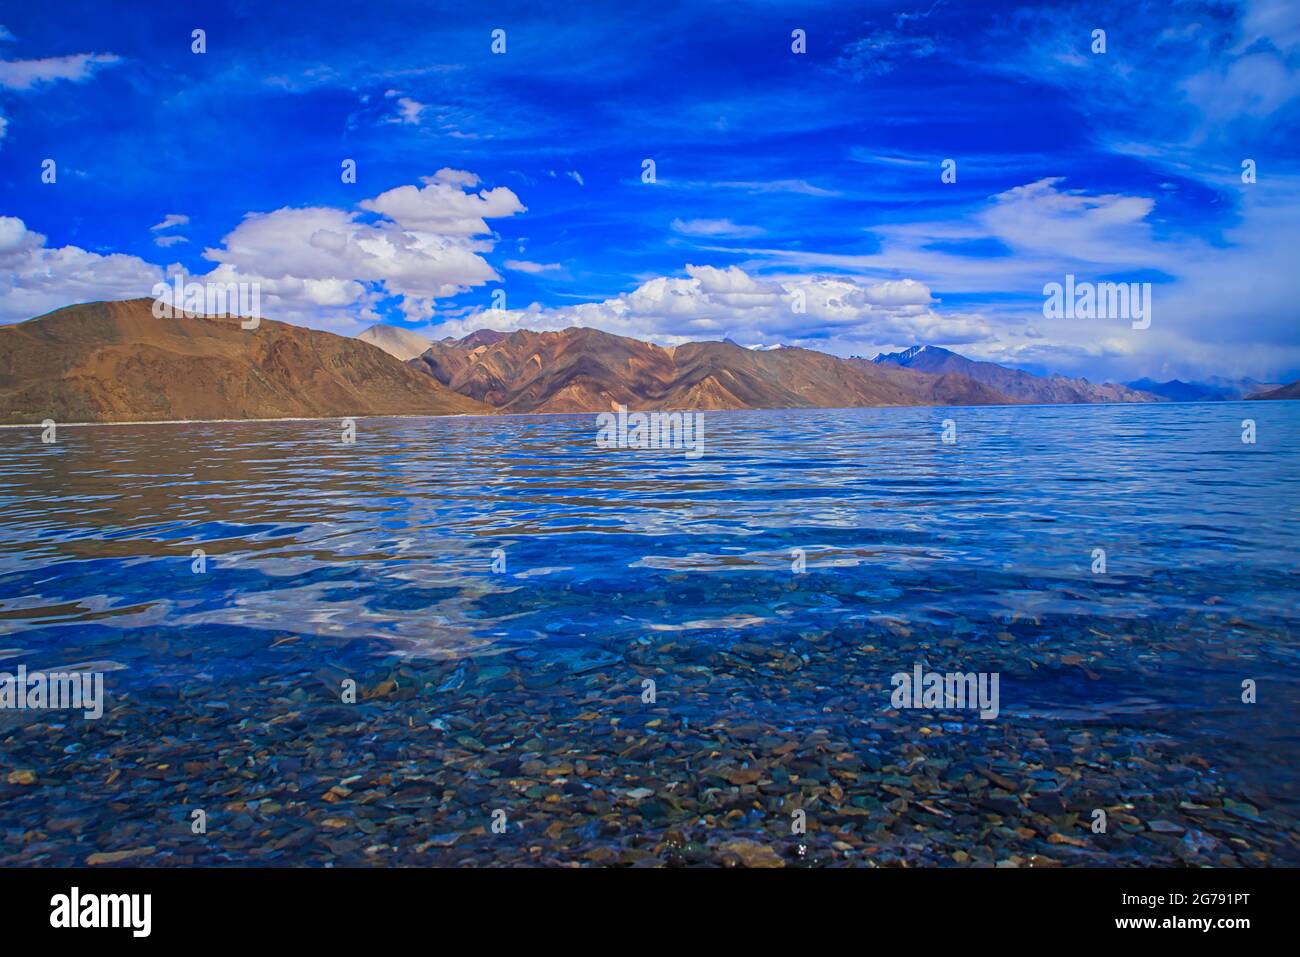 Il lago Pangong Tso o Pangong è un lago d'acqua salmastra, paludi e zone umide. Paesaggio un lago endorheic nell'himalaya, Jammu e Kashmir, India. JU Foto Stock